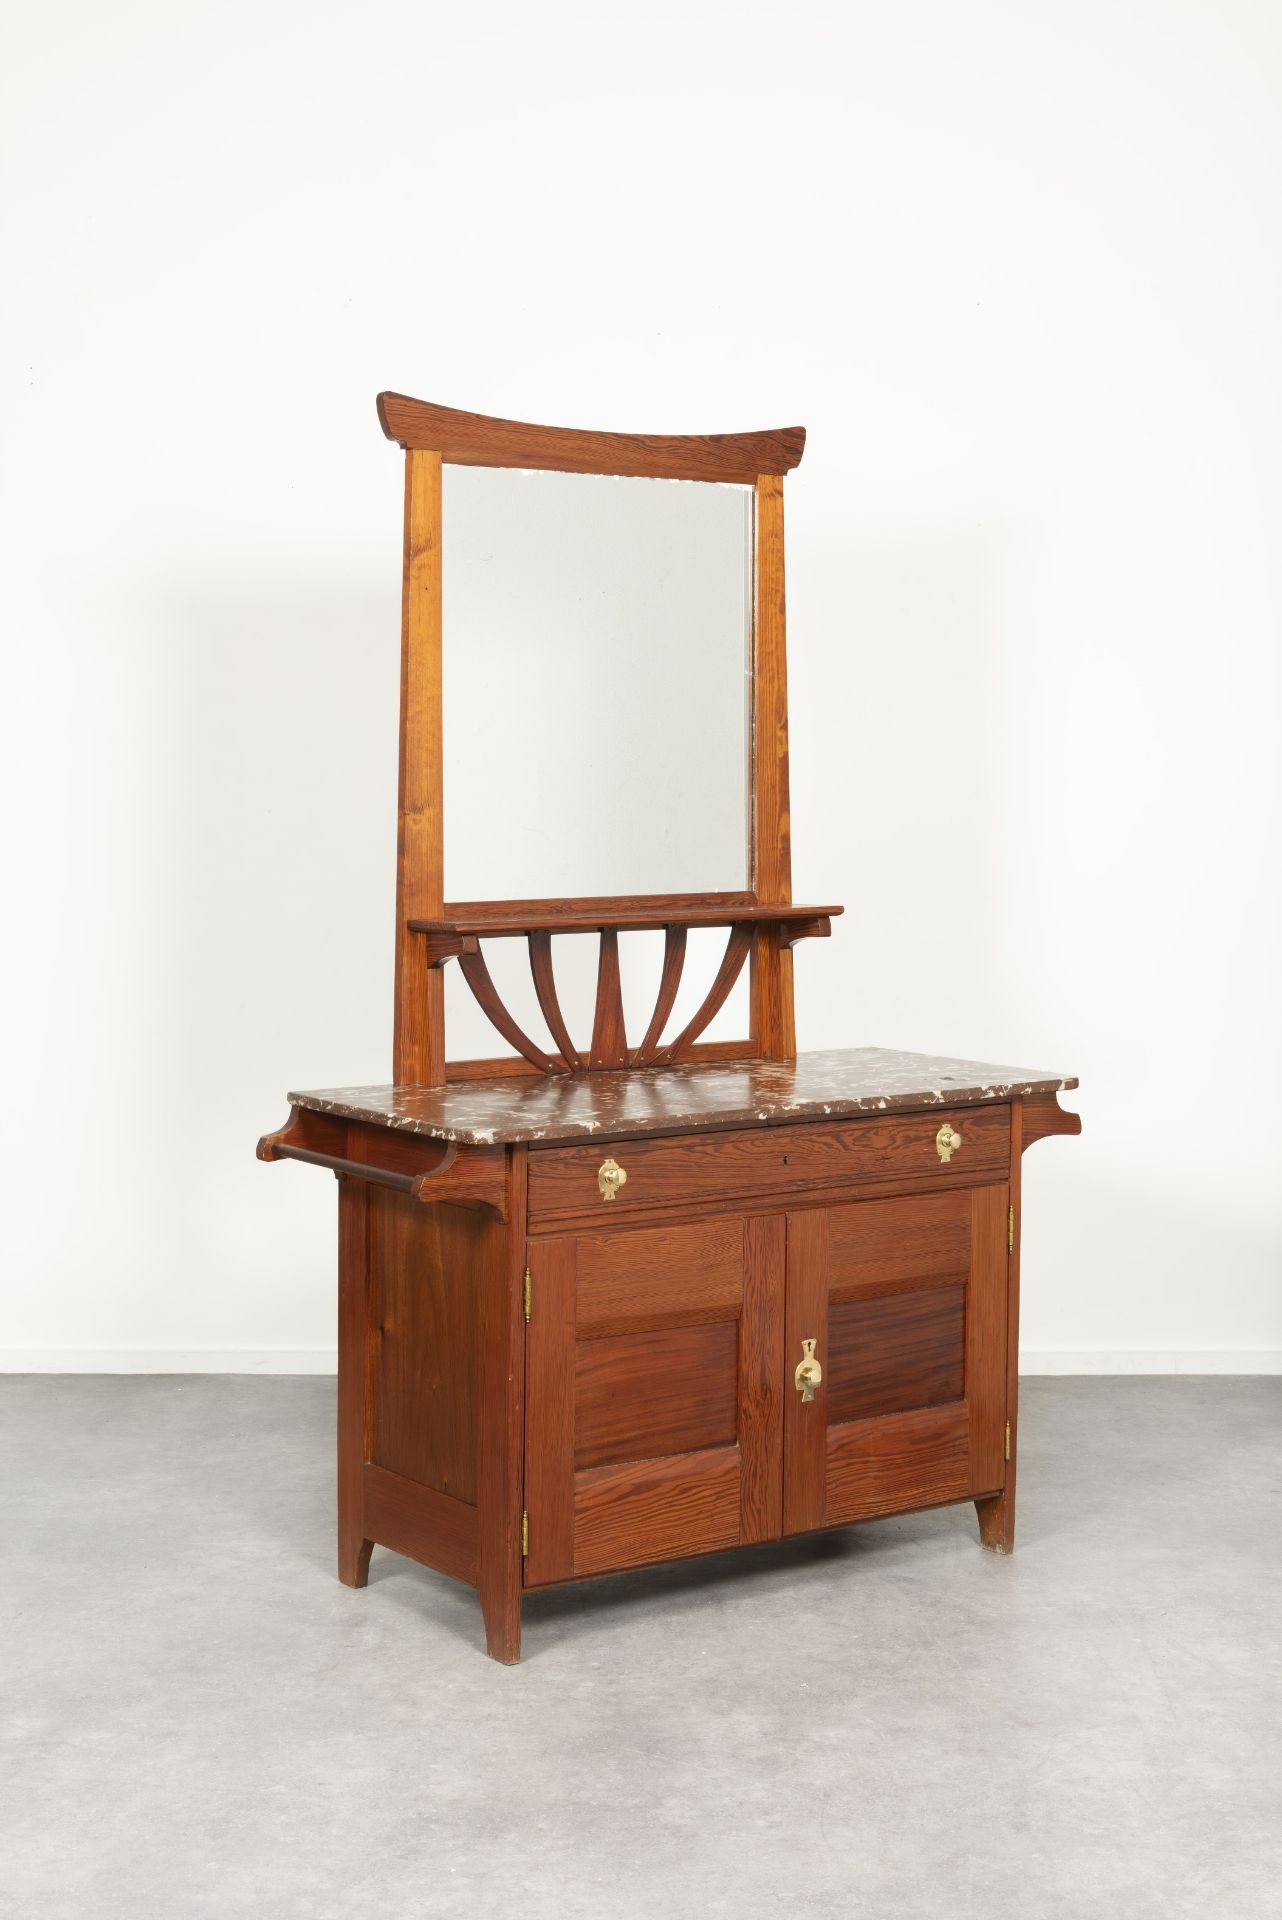 GUSTAVE SERRURIER BOVY (1858-1910) Coiffeuse - table de toilette en pitchpin, mod. Campagne, 1902